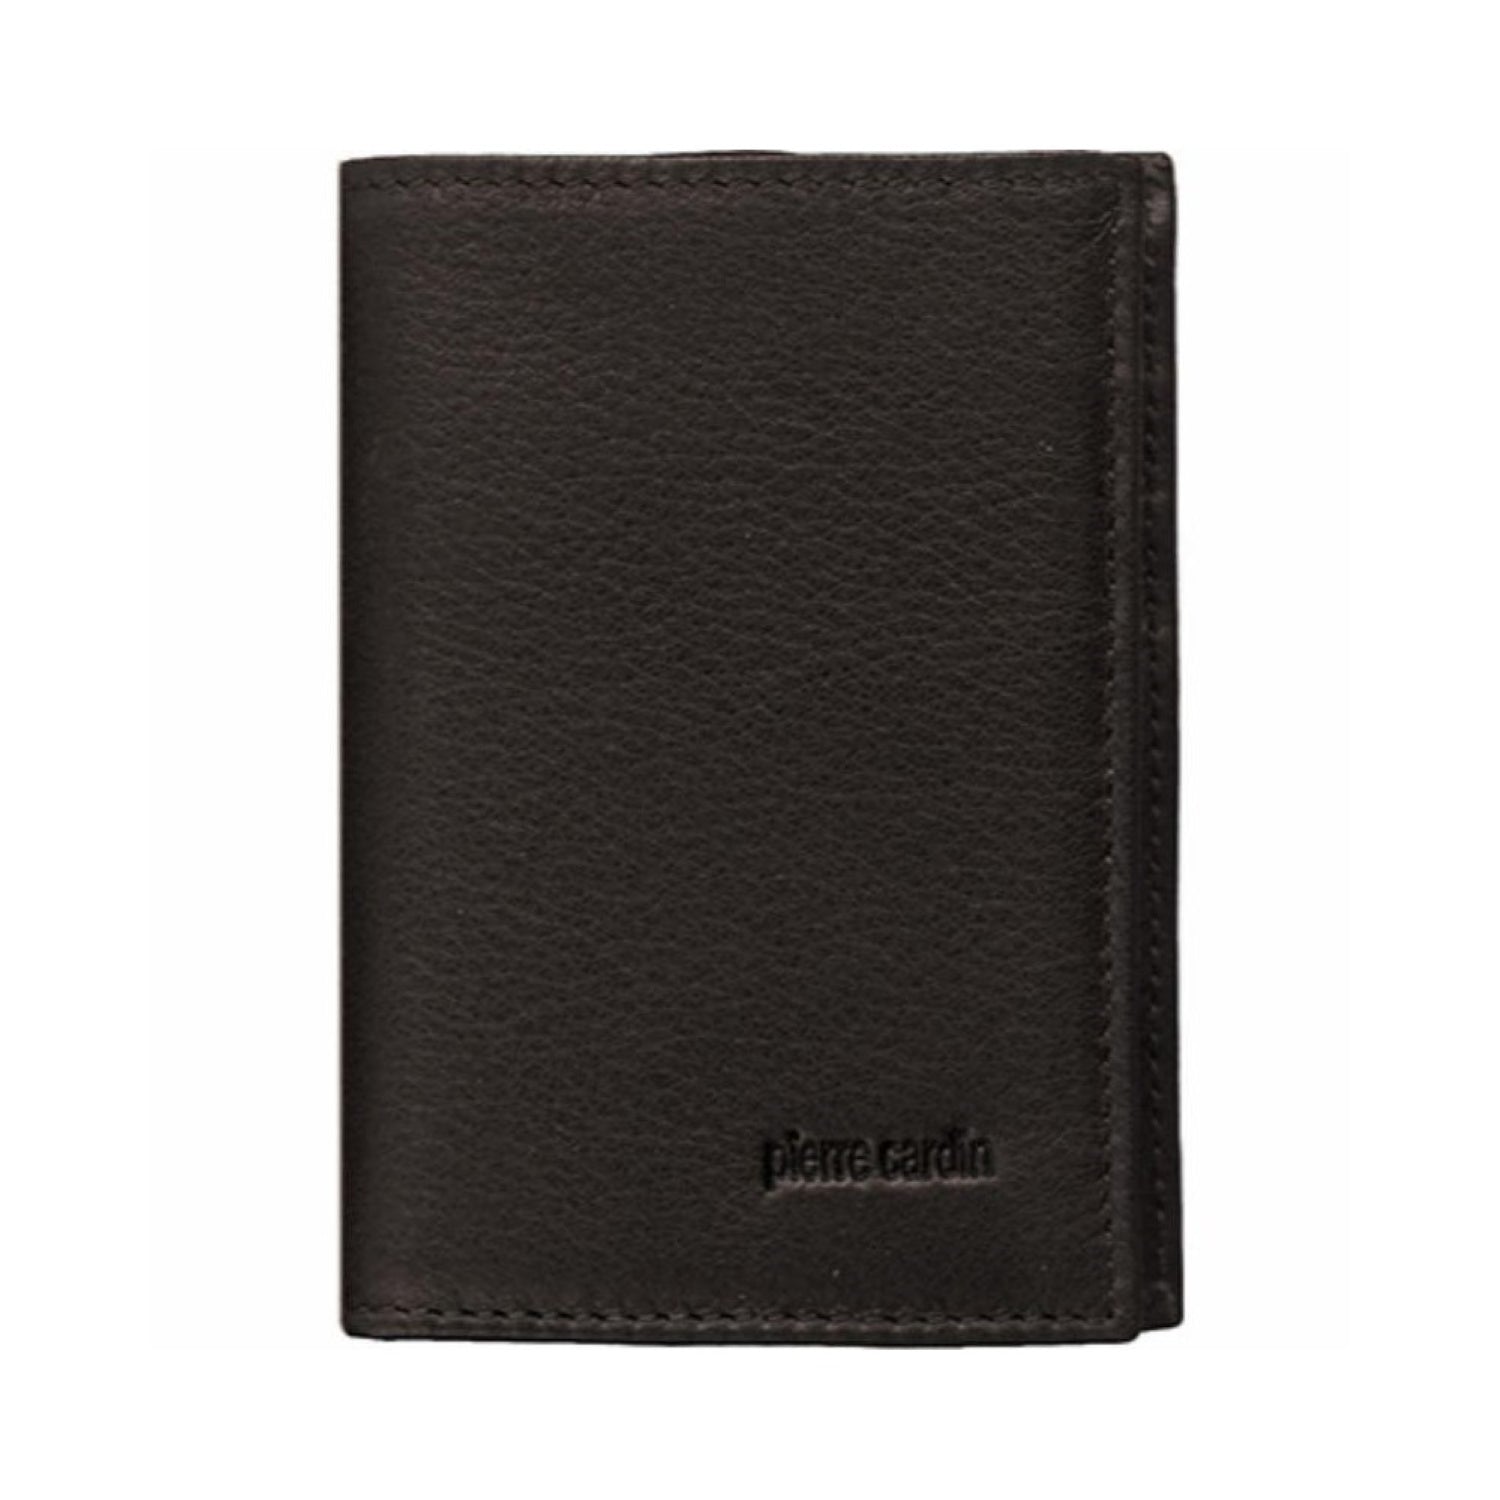 Pierre Cardin RFID Leather Credit Card Holder 8784 - Black